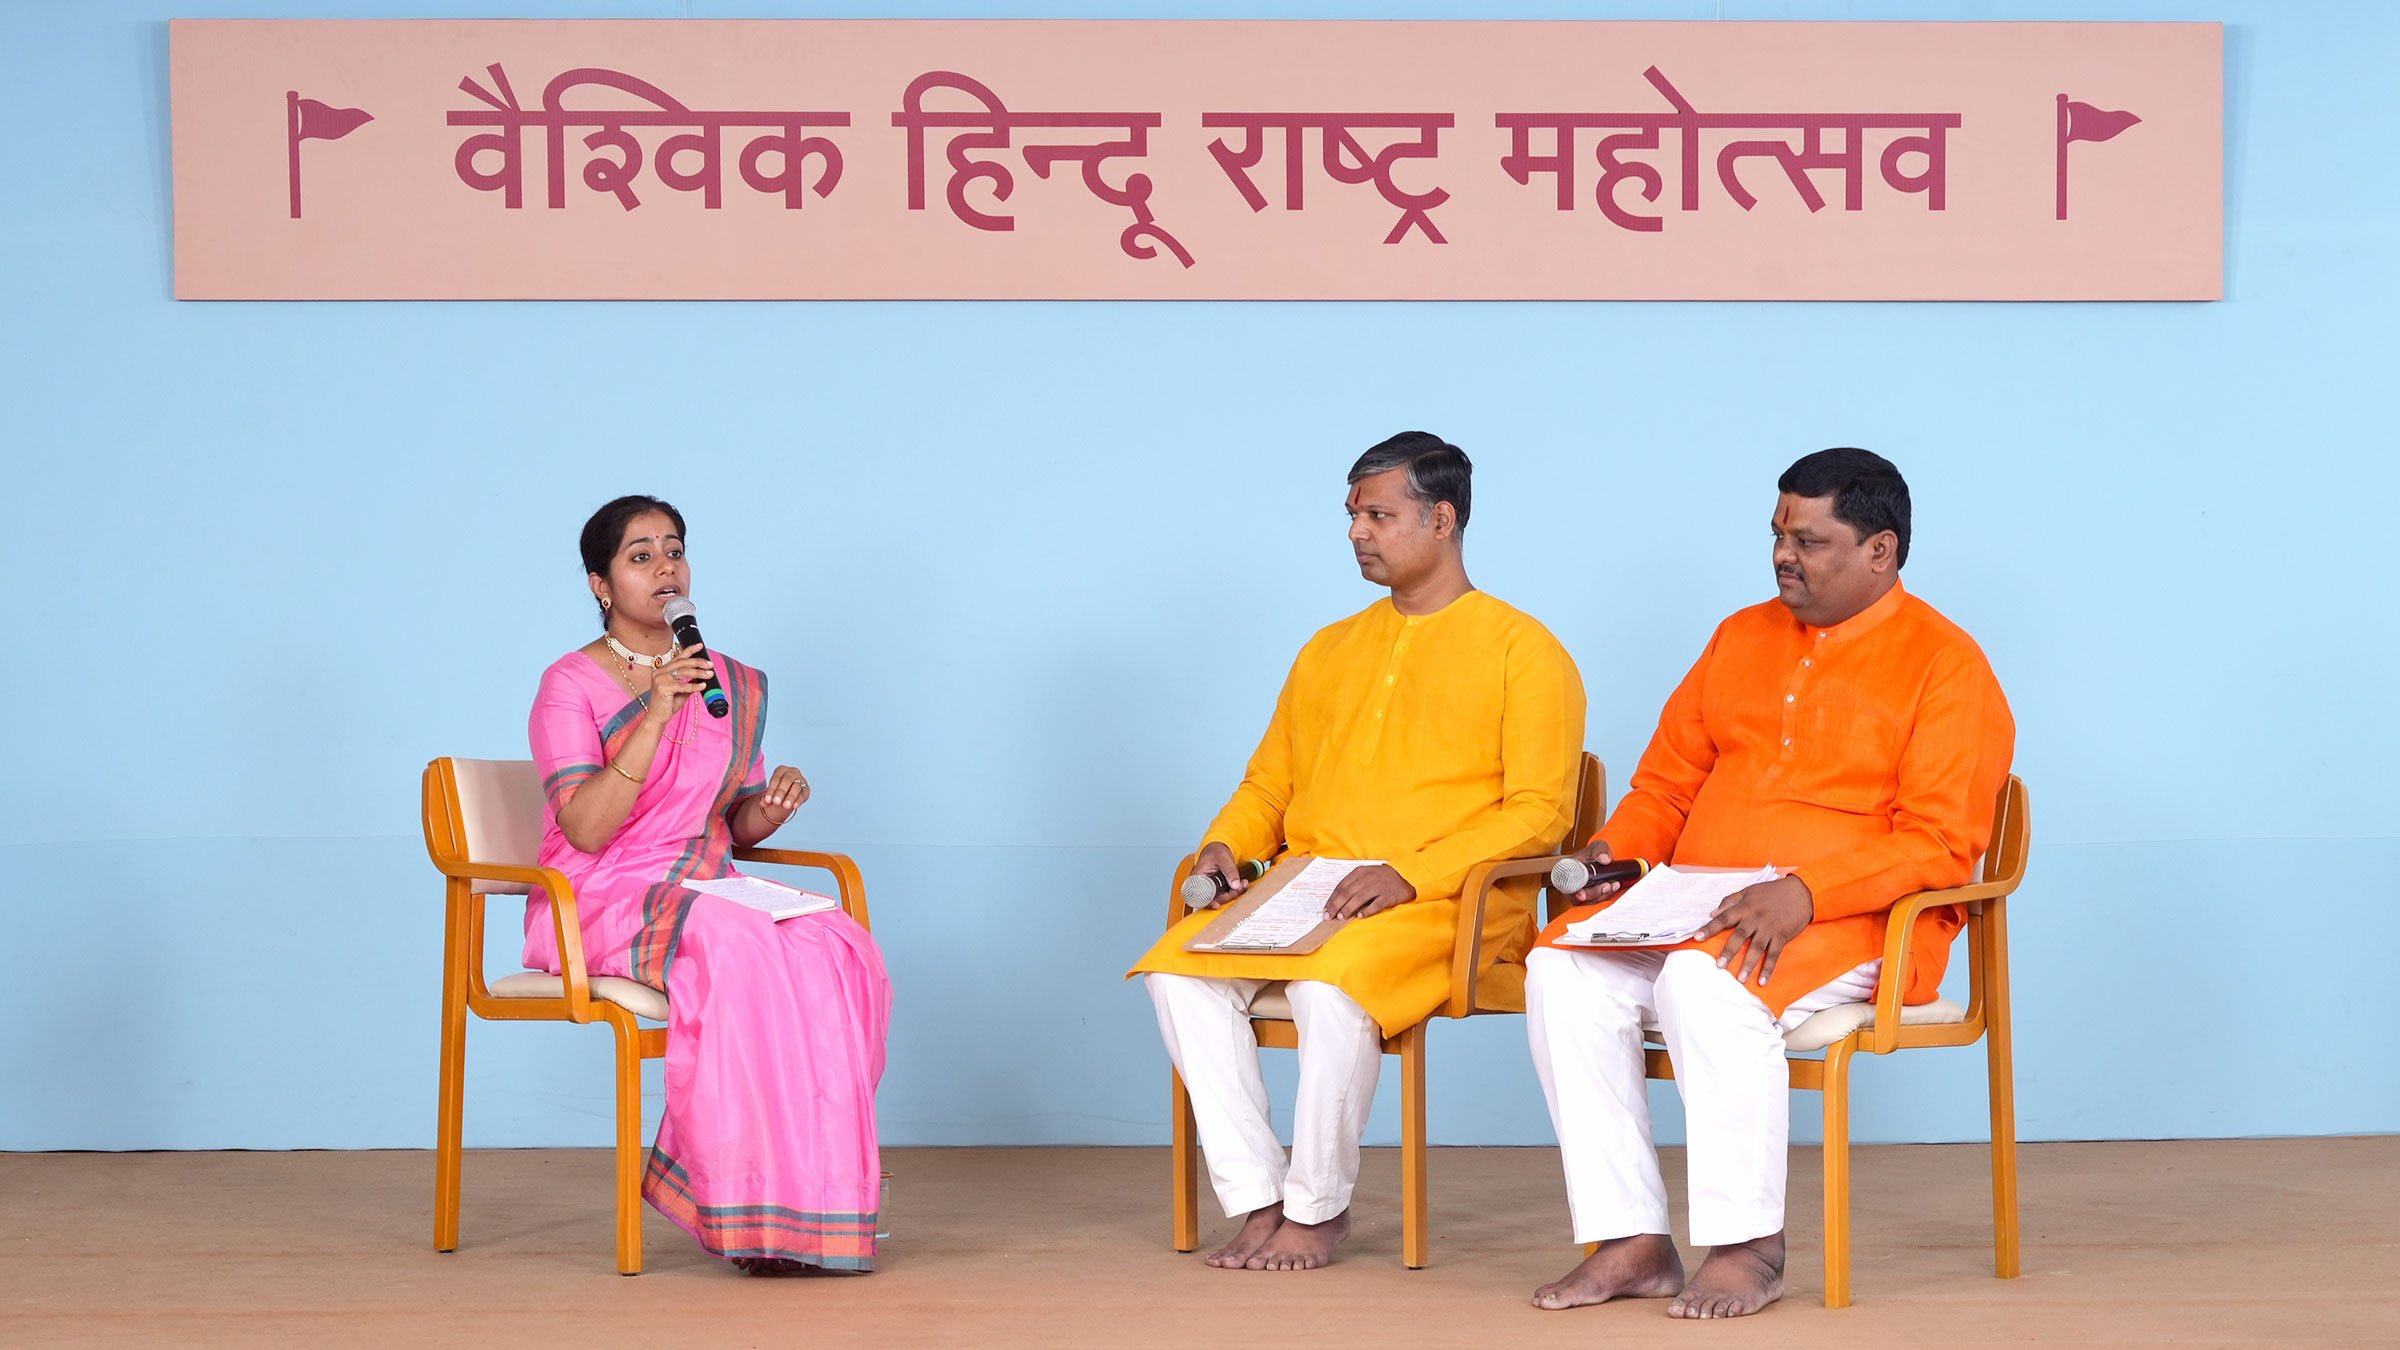 Ms Kritika Khatri (Spokesperson, Sanatan Sanstha, Delhi) compering during the deliberations on the subject of Mandir Sanghatan, while Mr Prashant Juvekar (Coordinator, Hindu Janajagruti Samiti, Jalgaon, Maharashtra) and Mr Sunil Ghanwat (Rajya Sangathak, Hindu Janajagruti Samiti, Maharashtra and Chhattisgarh) elucidate the efforts made and success achieved during the move to unite temples